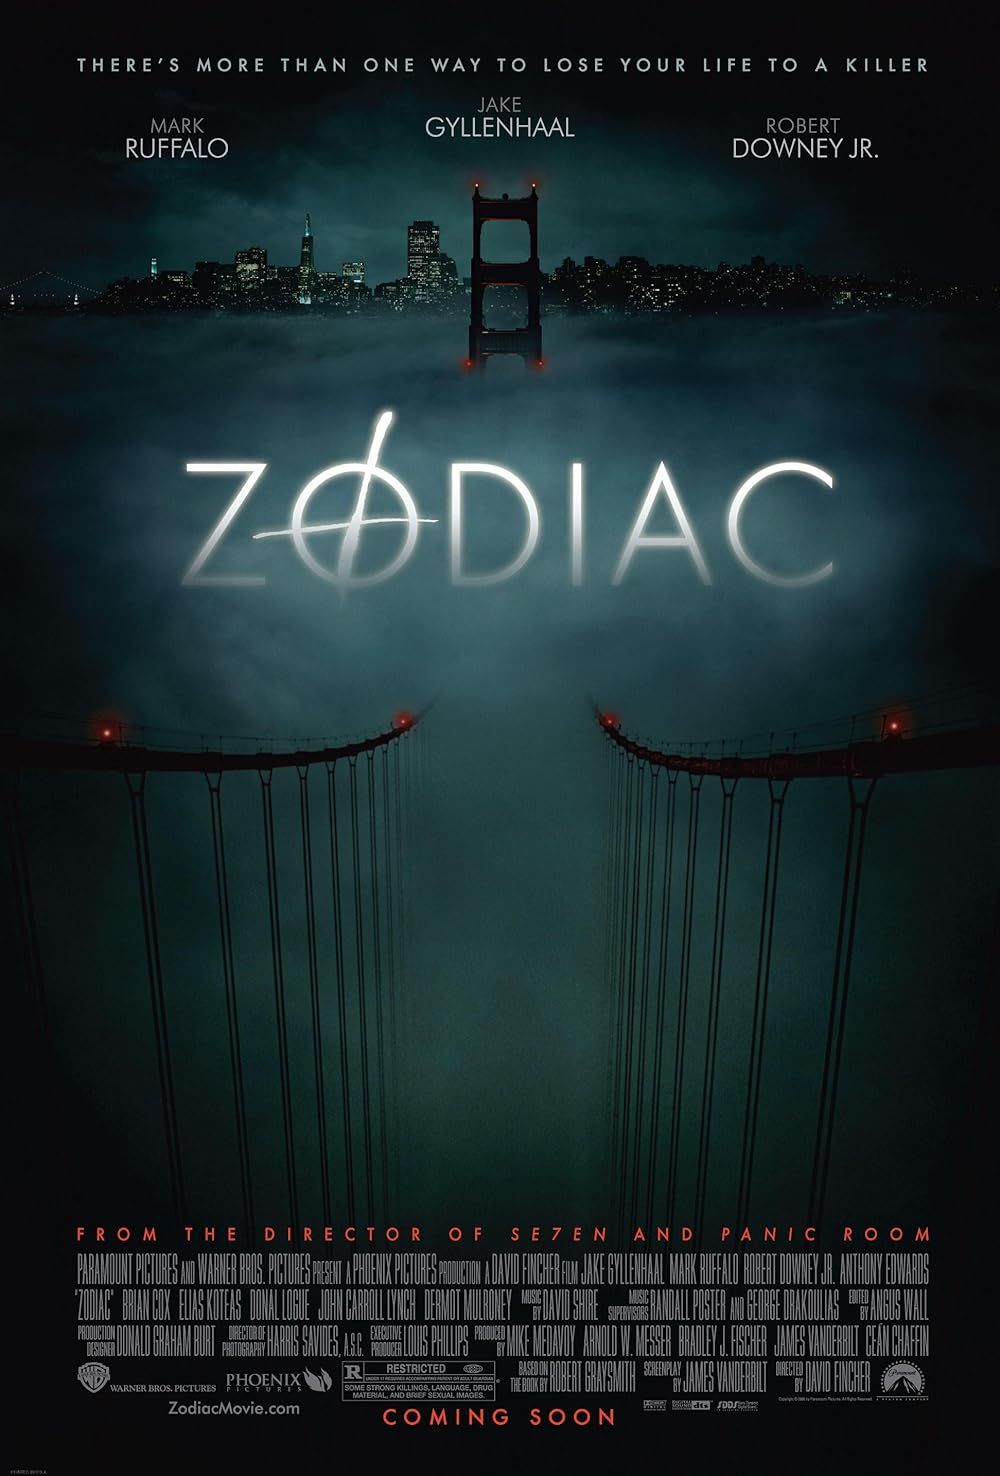 The Golden Gate Bridge on the Zodiac 2007 Poster